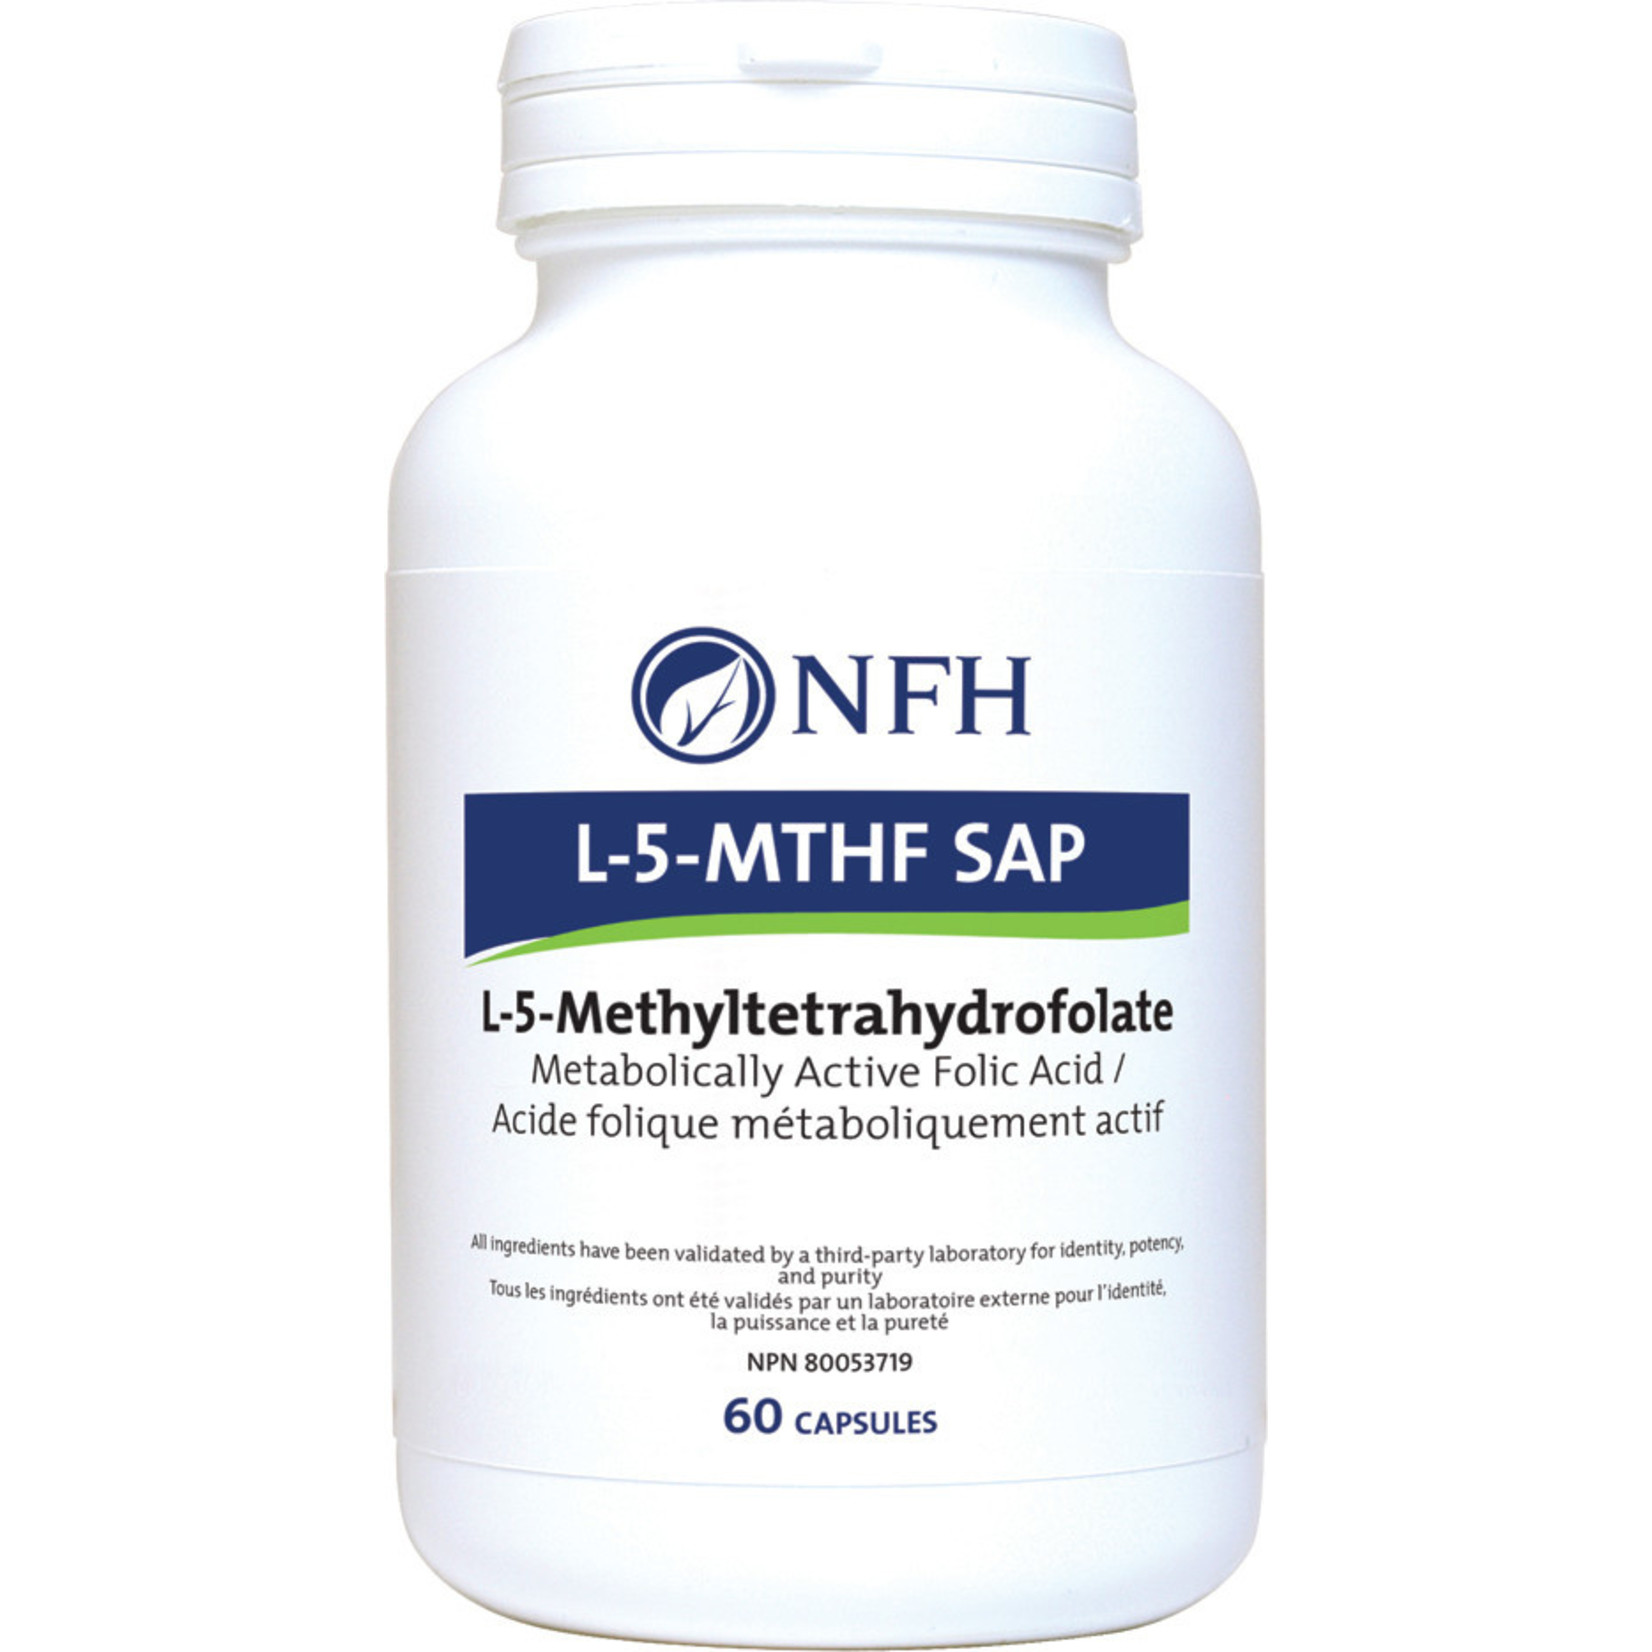 NFH NFH L-5-MTHF SAP (1MG) 60 VEGICAPS